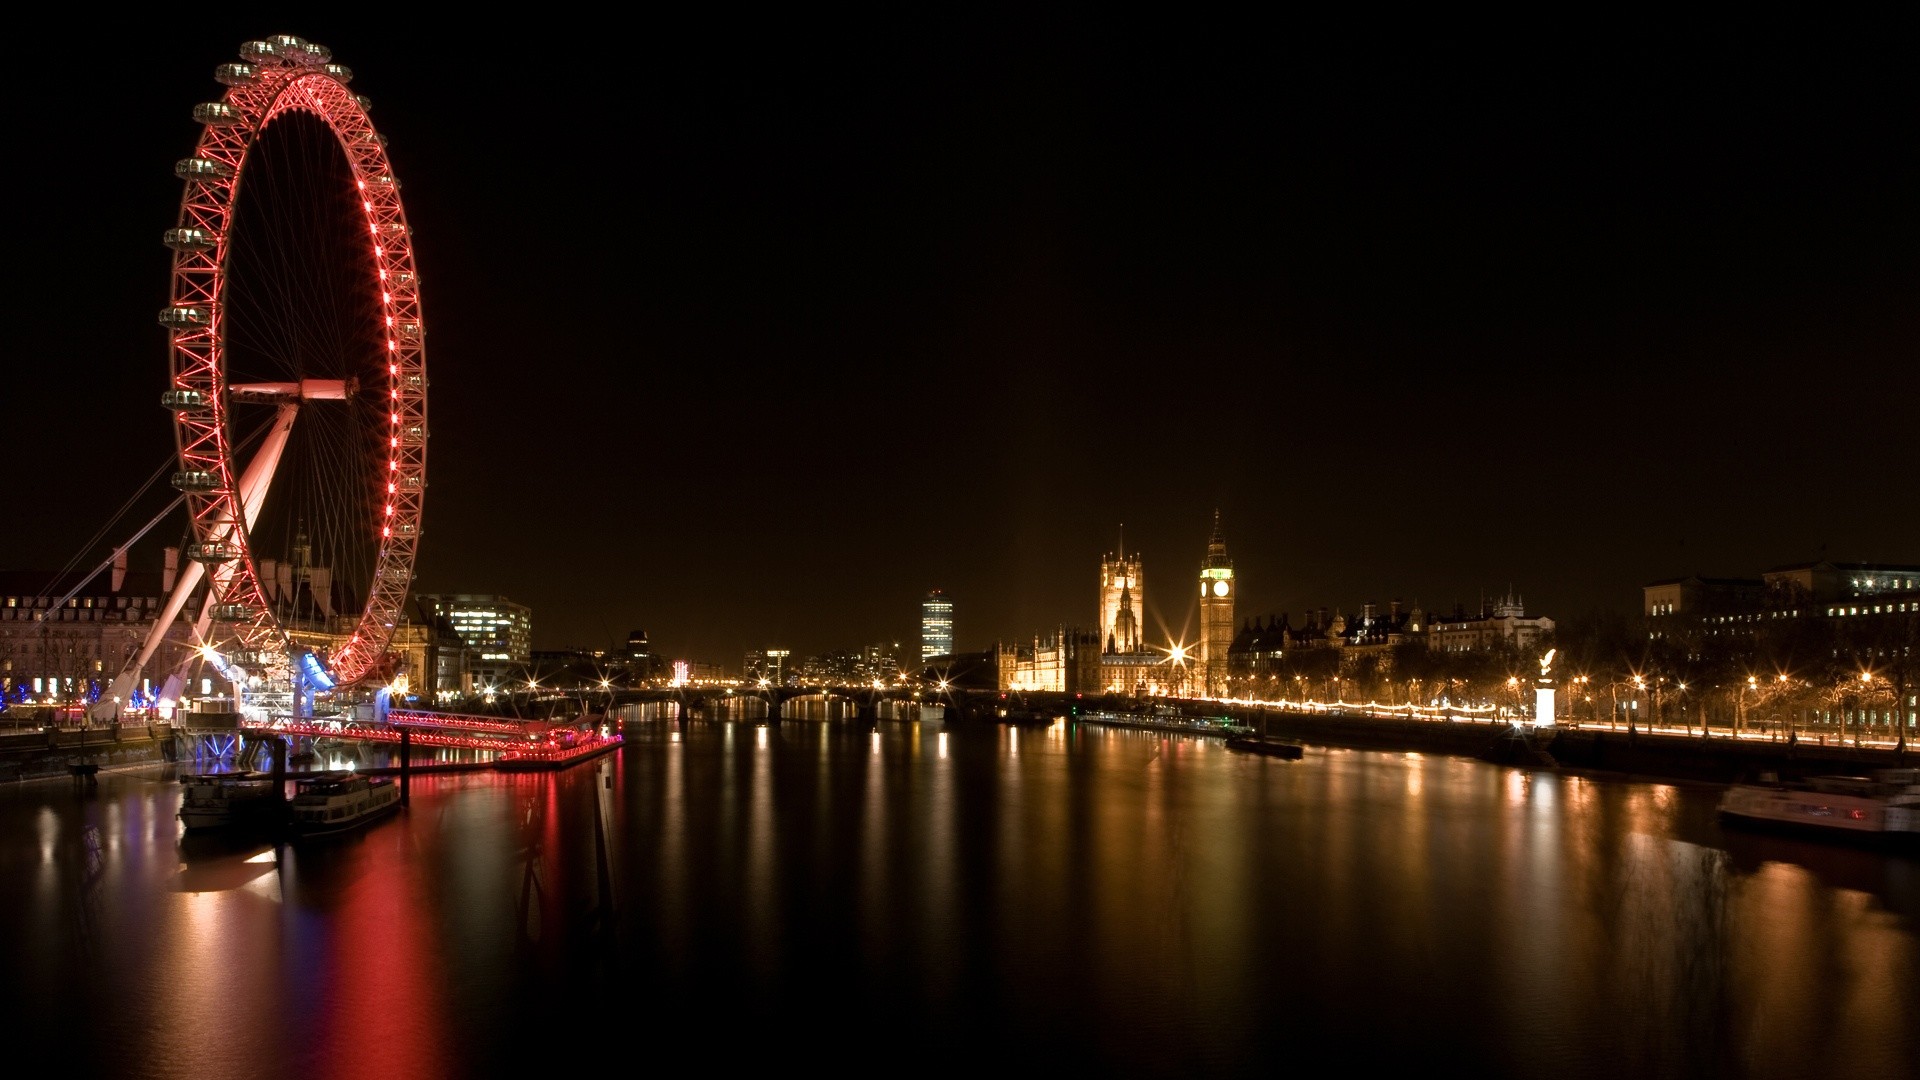 General 1920x1080 London London Eye ferris wheel cityscape night River Thames Westminster UK England river city lights